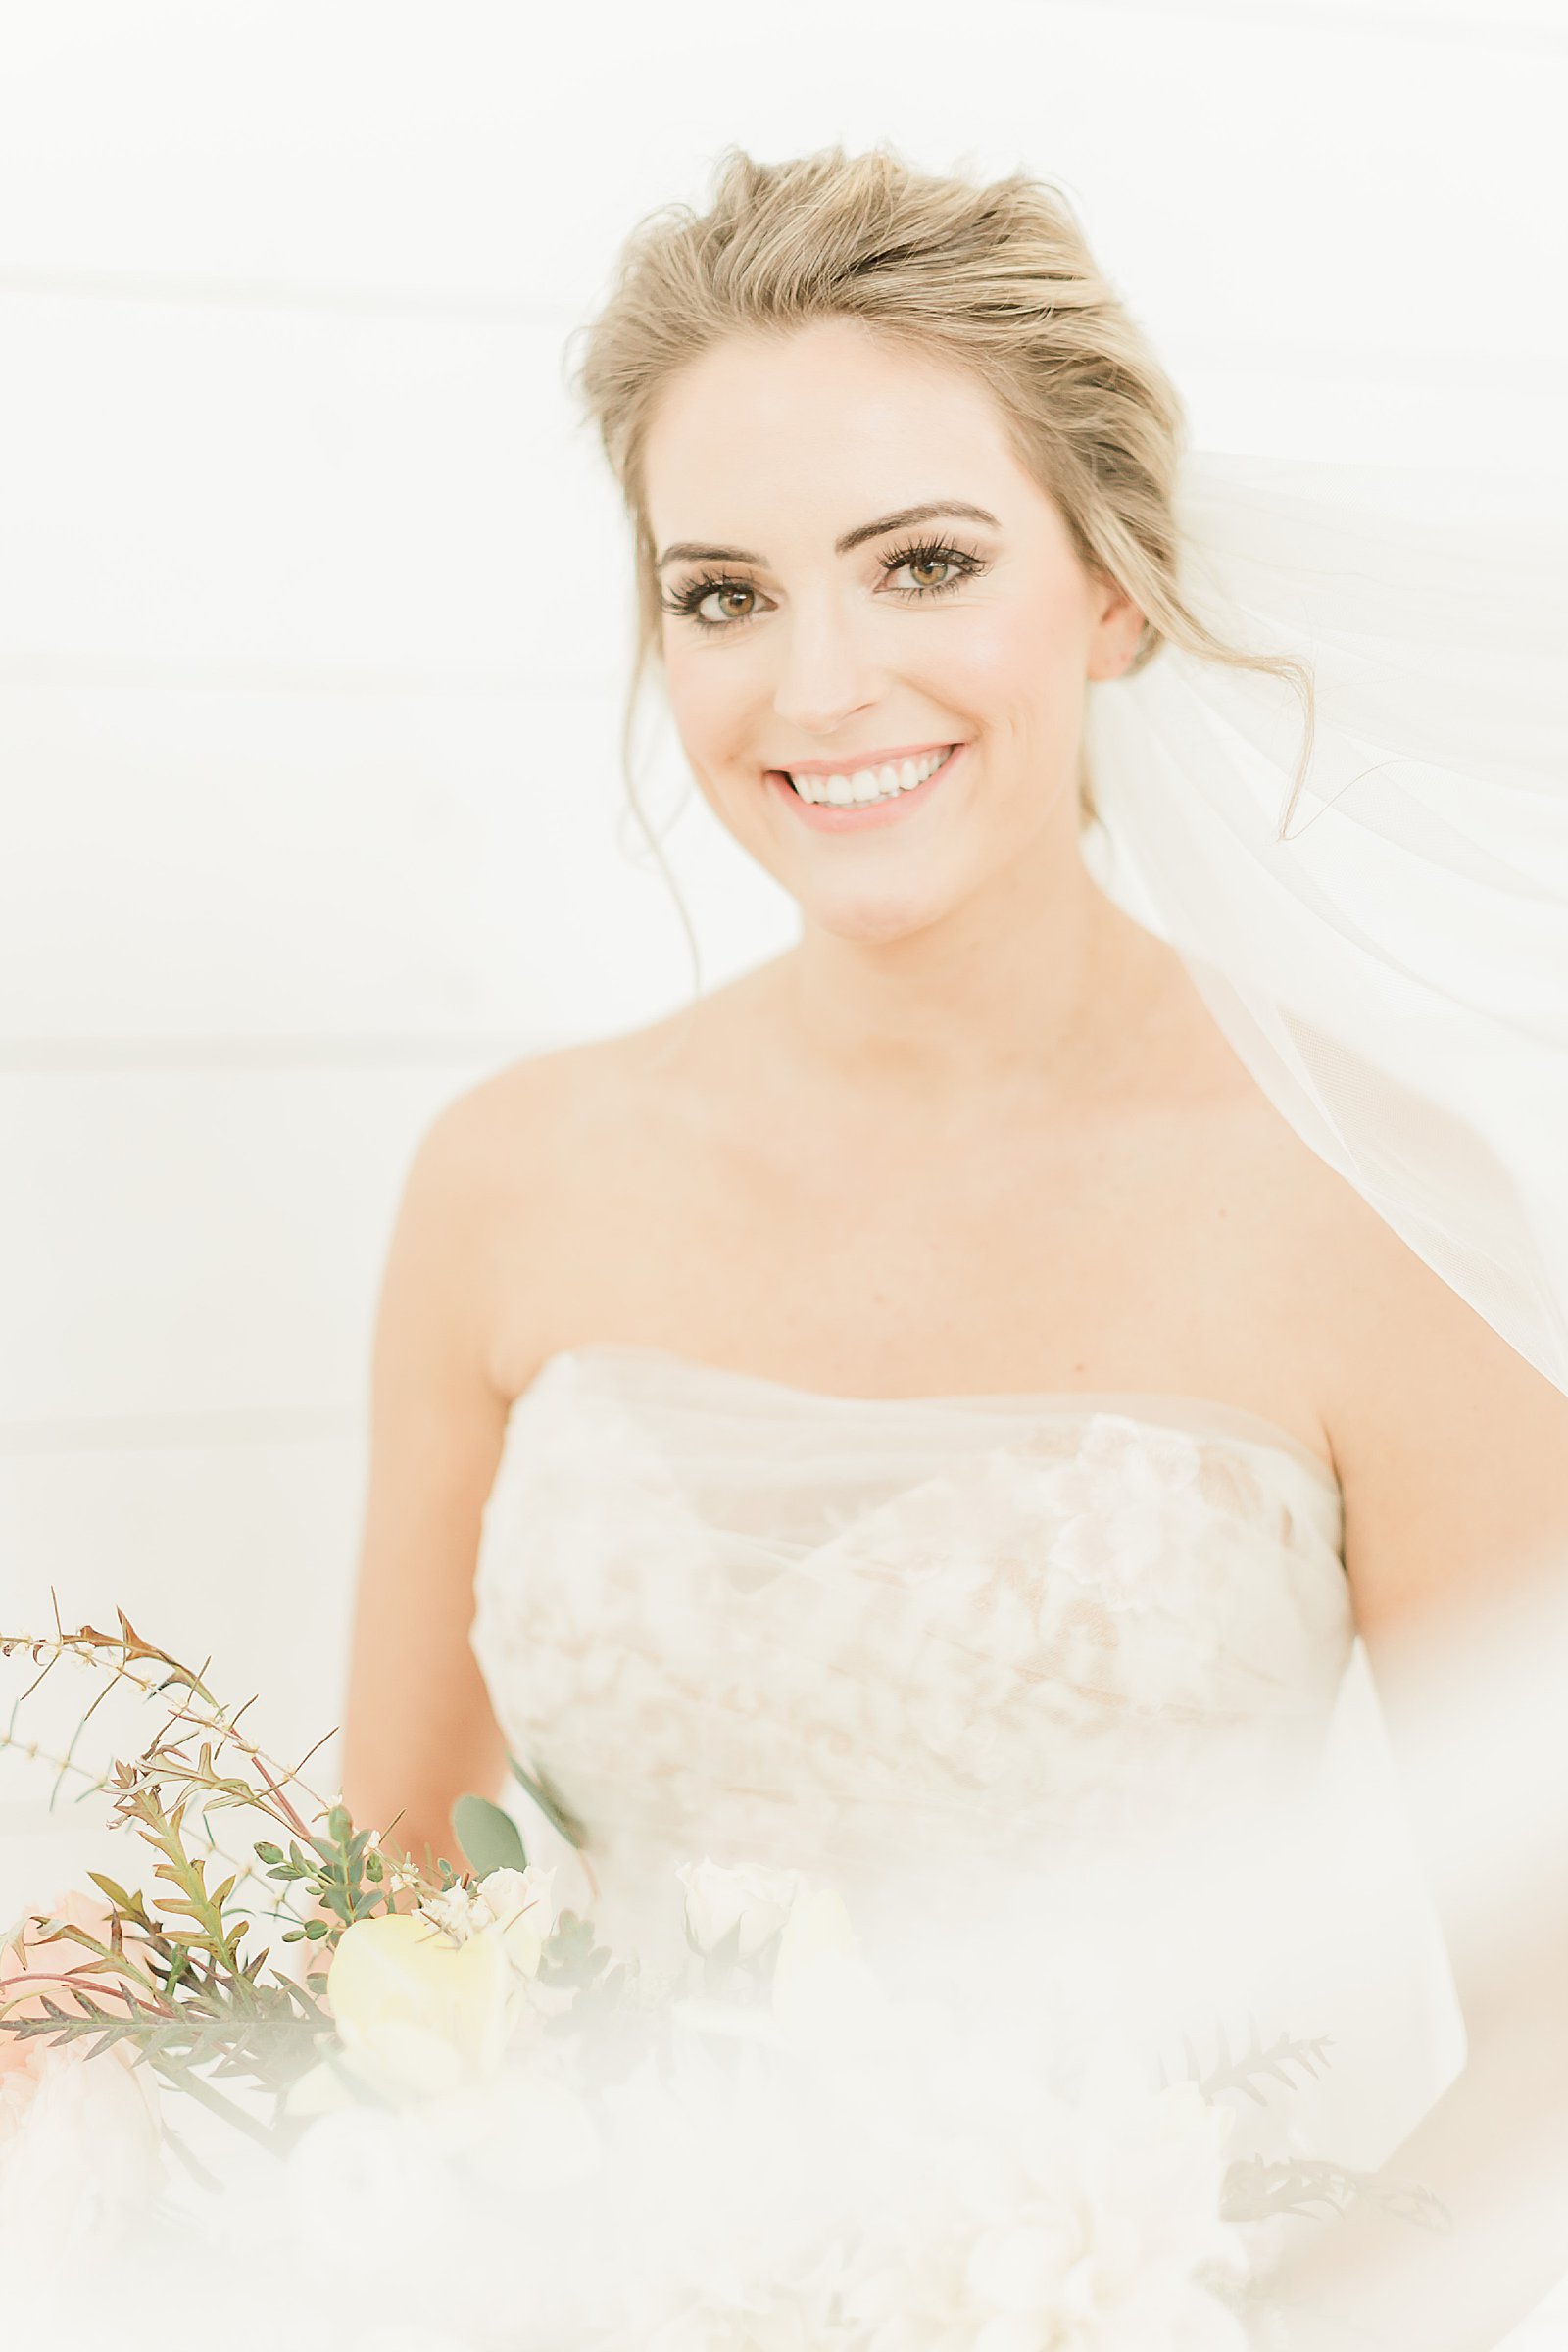 Bride at The Nest, Dallas, Texas Wedding Photographer, Anna Kay Photography